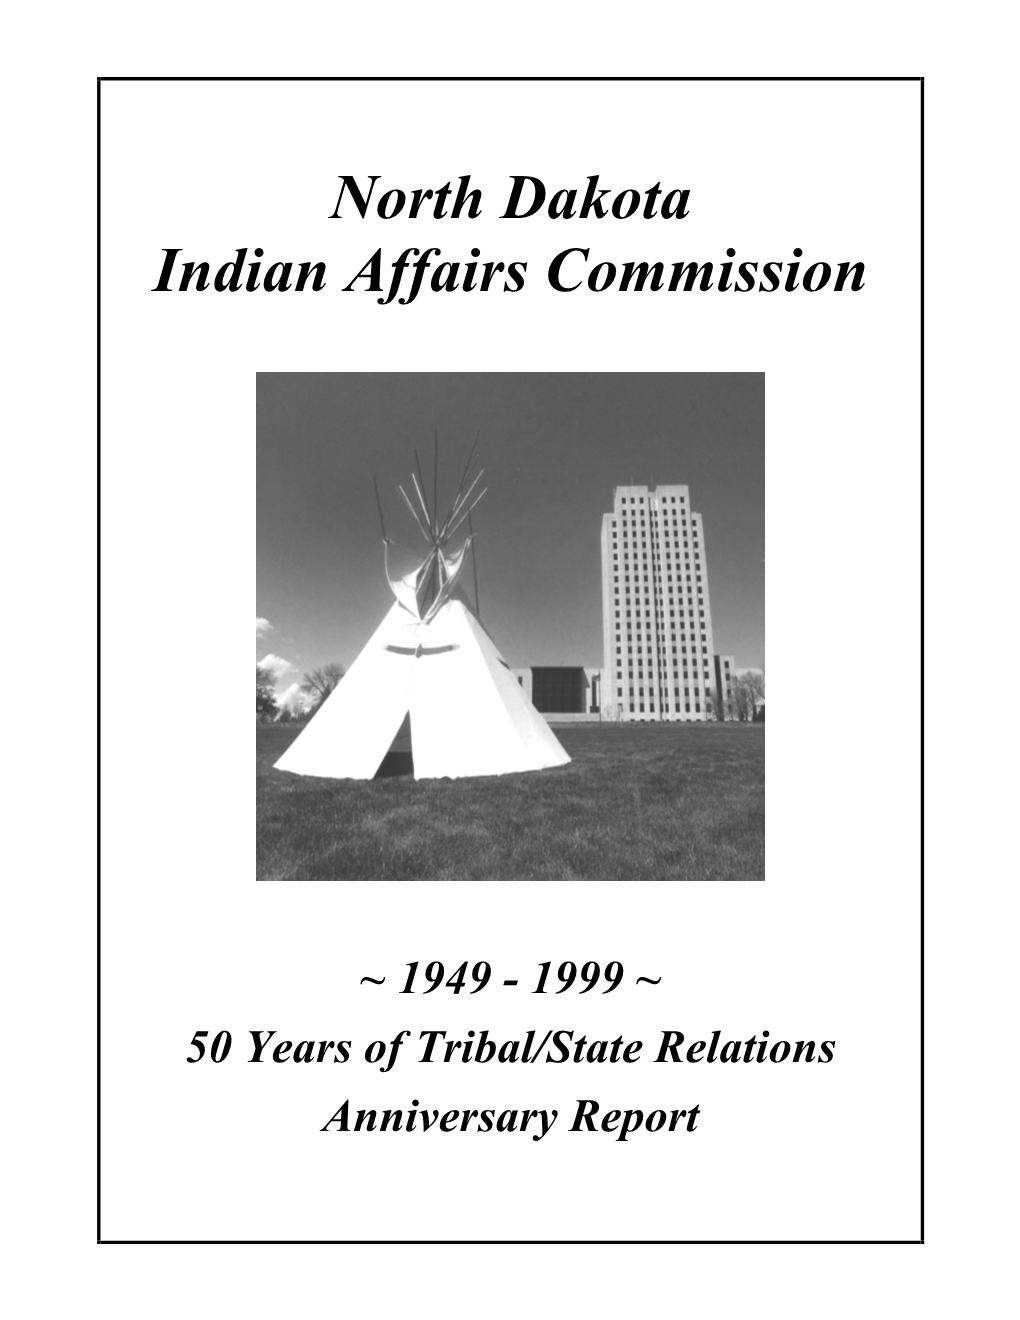 50 Years of Tribal/State Relations Anniversary Report